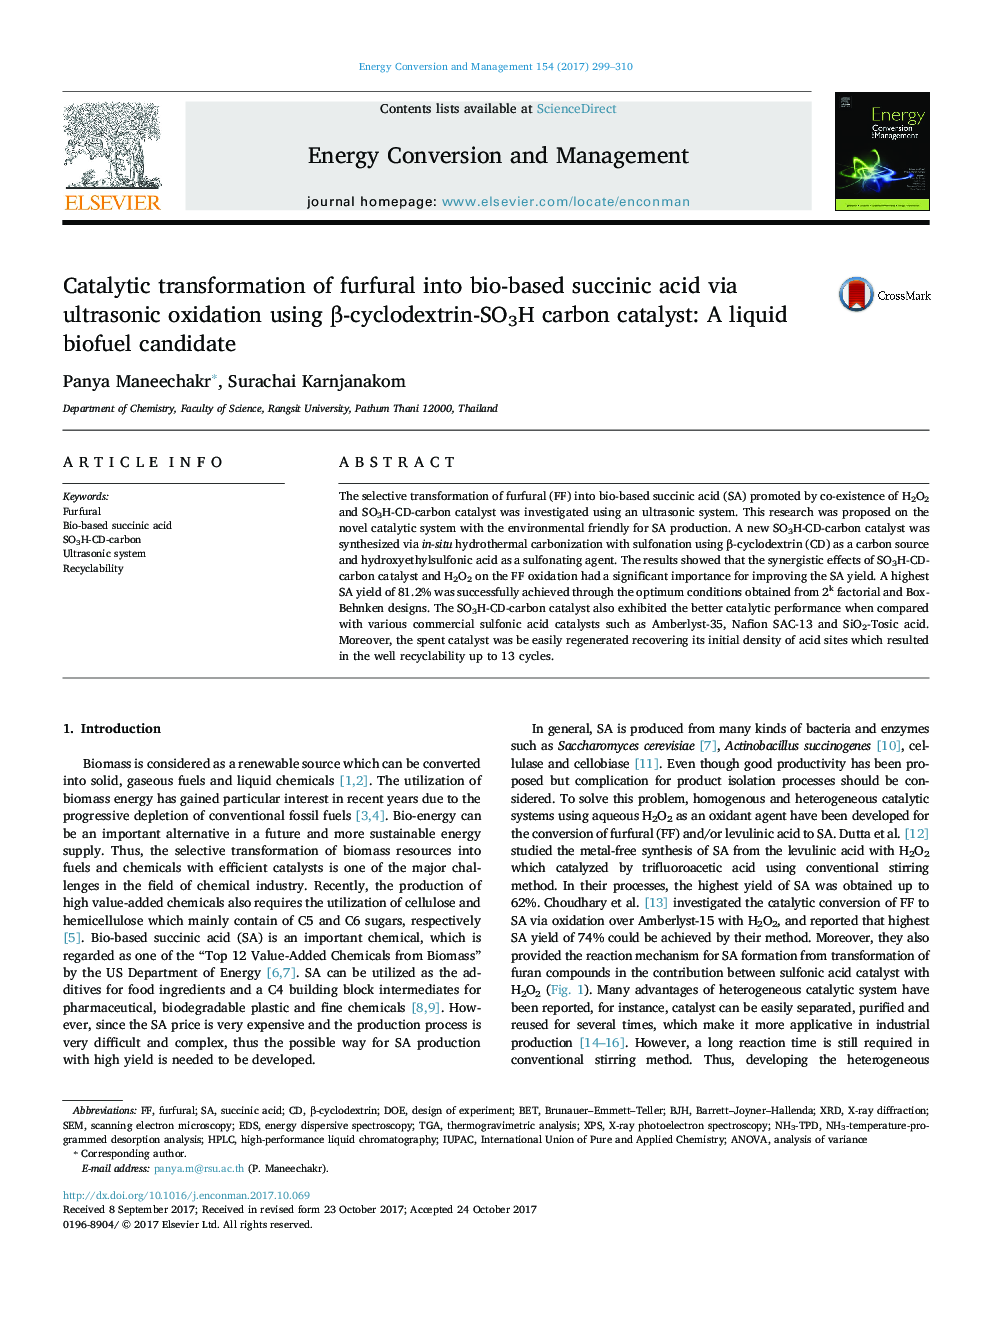 Catalytic transformation of furfural into bio-based succinic acid via ultrasonic oxidation using Î²-cyclodextrin-SO3H carbon catalyst: A liquid biofuel candidate